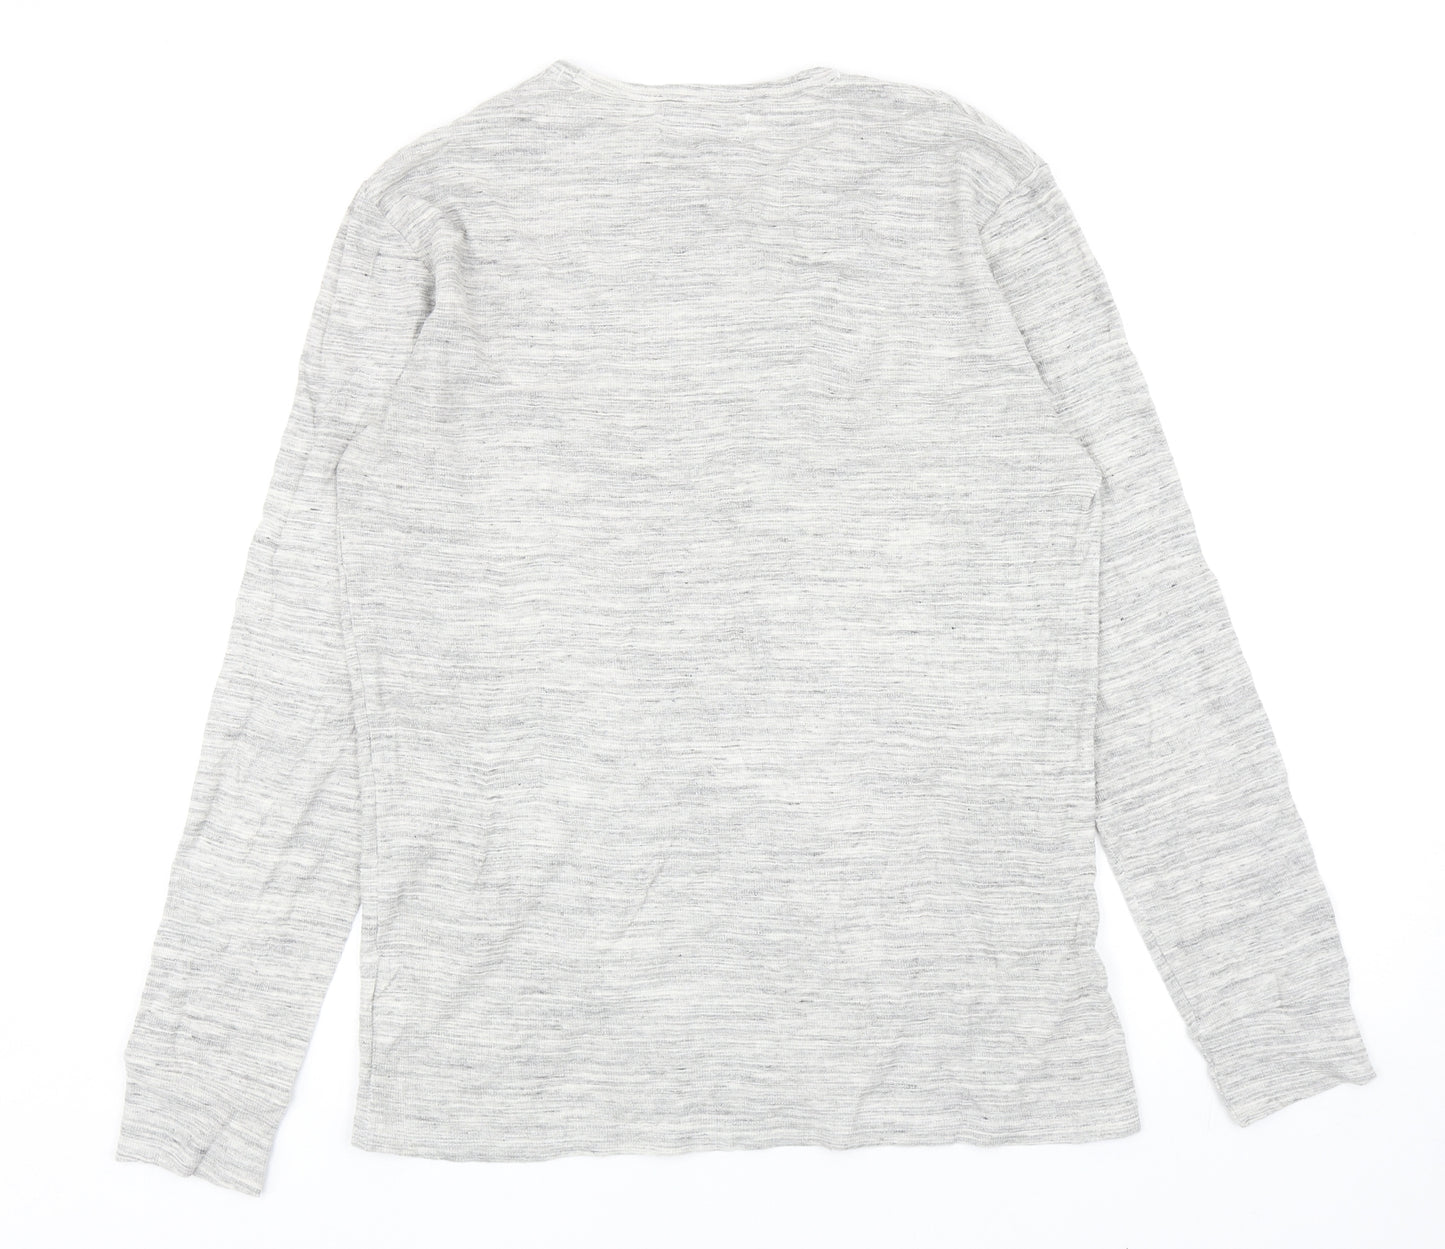 Primark Mens Grey Cotton Pullover Sweatshirt Size M